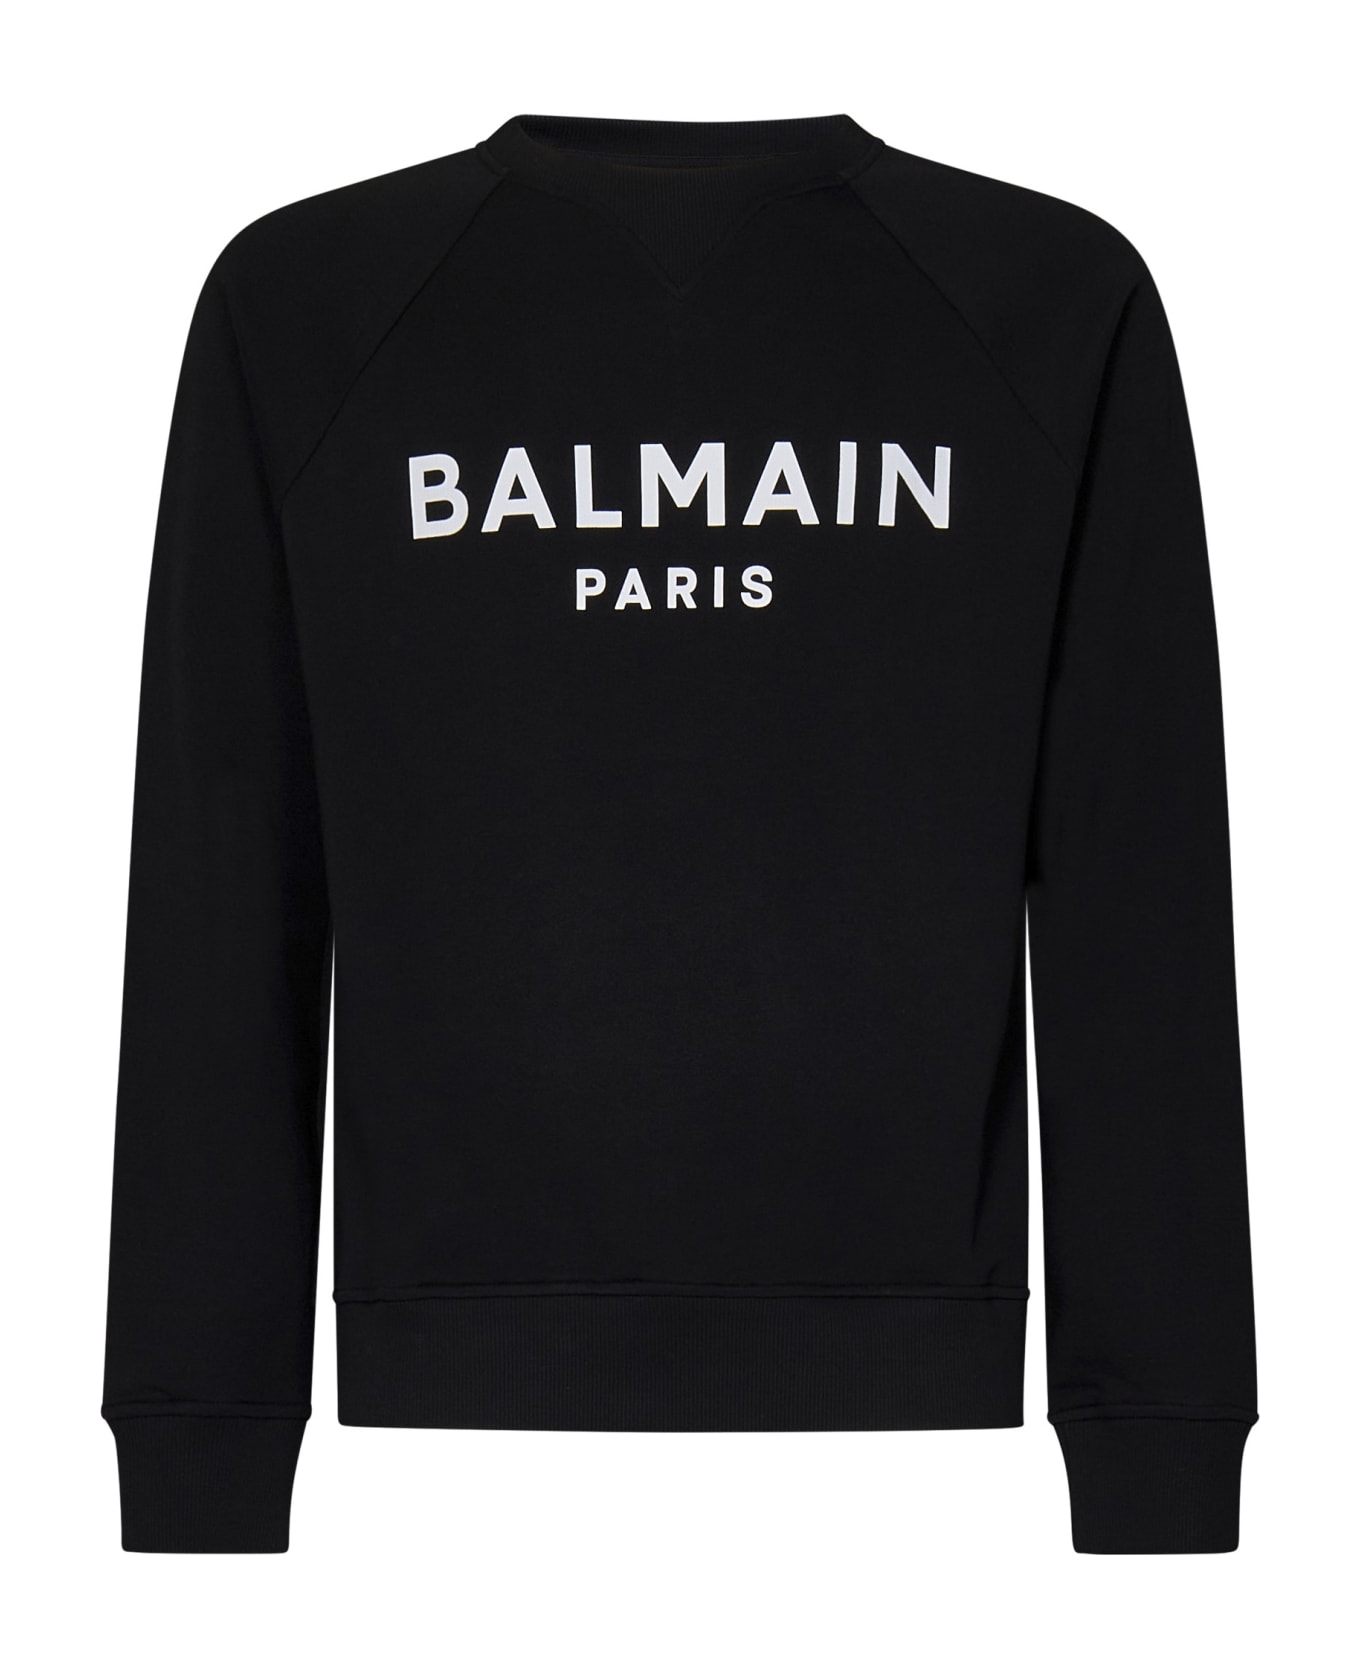 Balmain Paris  Paris Sweatshirt - Black